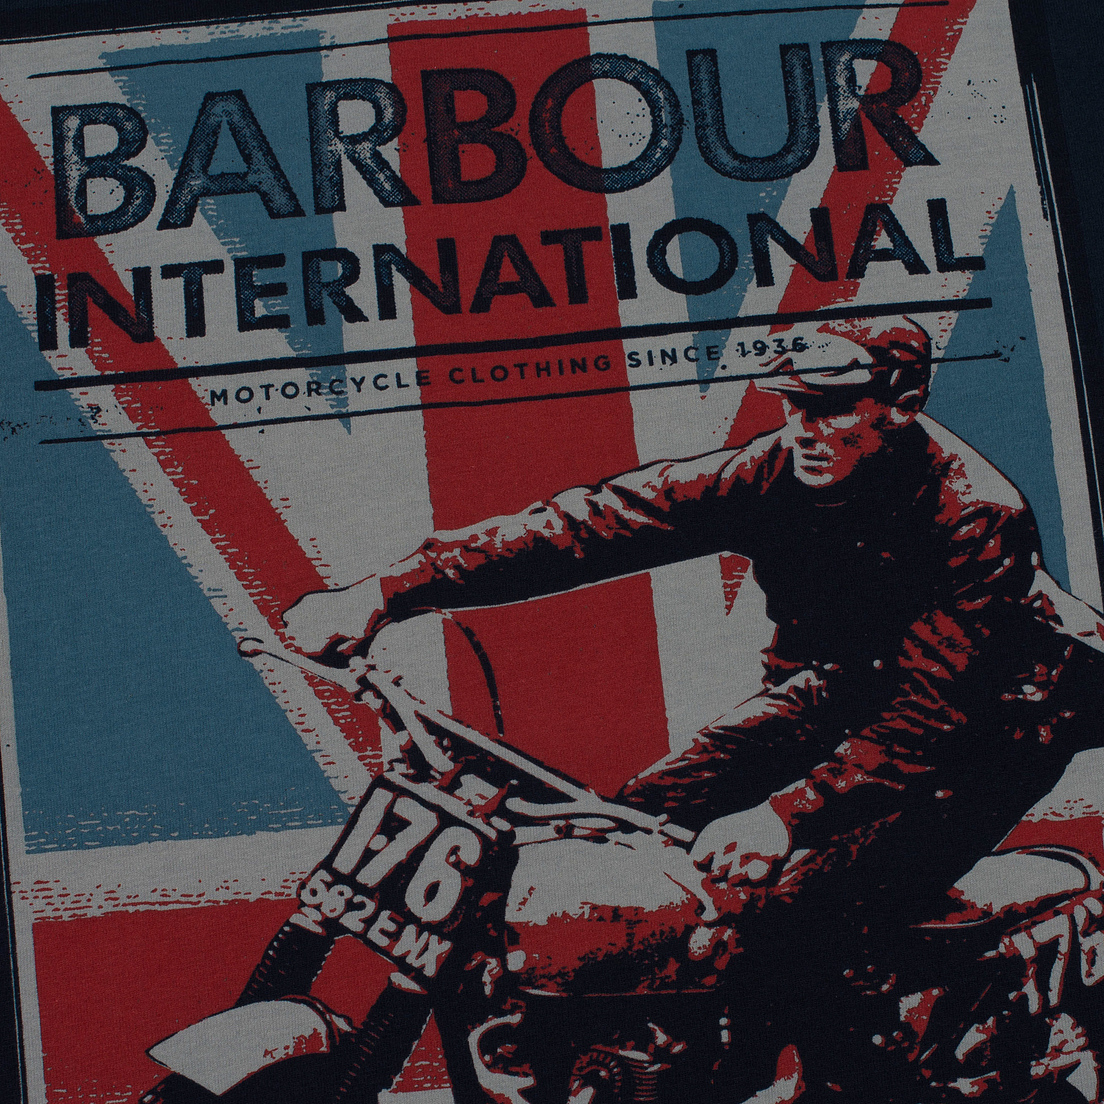 Barbour Мужская футболка International Jack